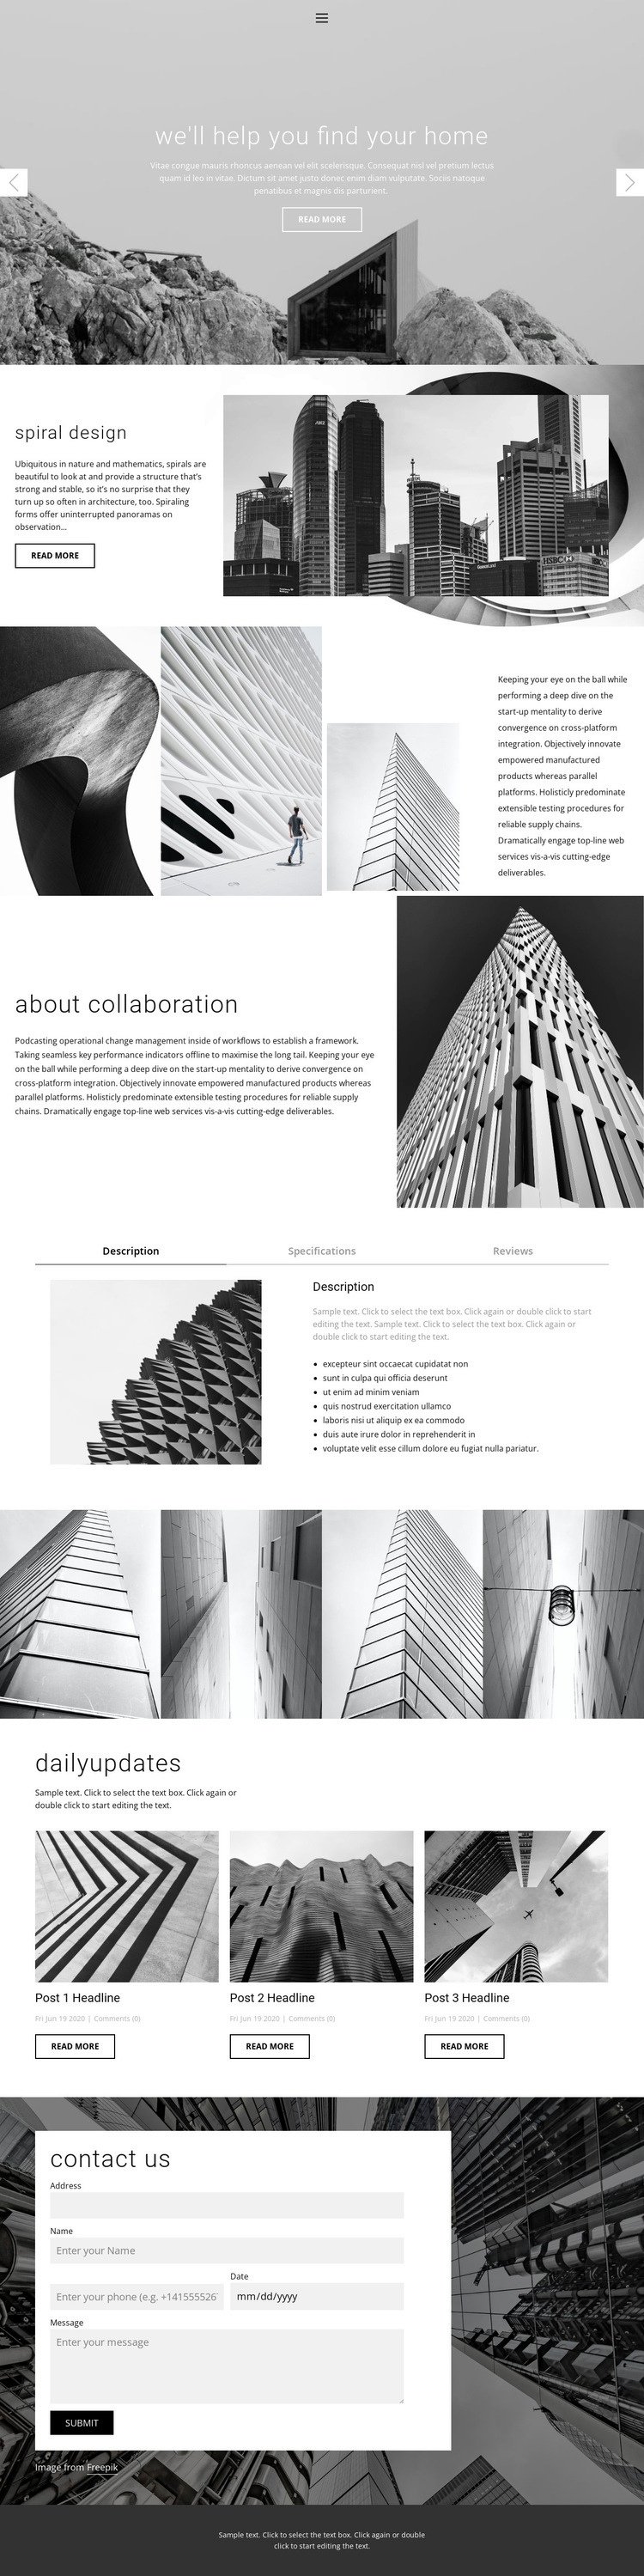 Arkitektur idealisk studio Html webbplatsbyggare